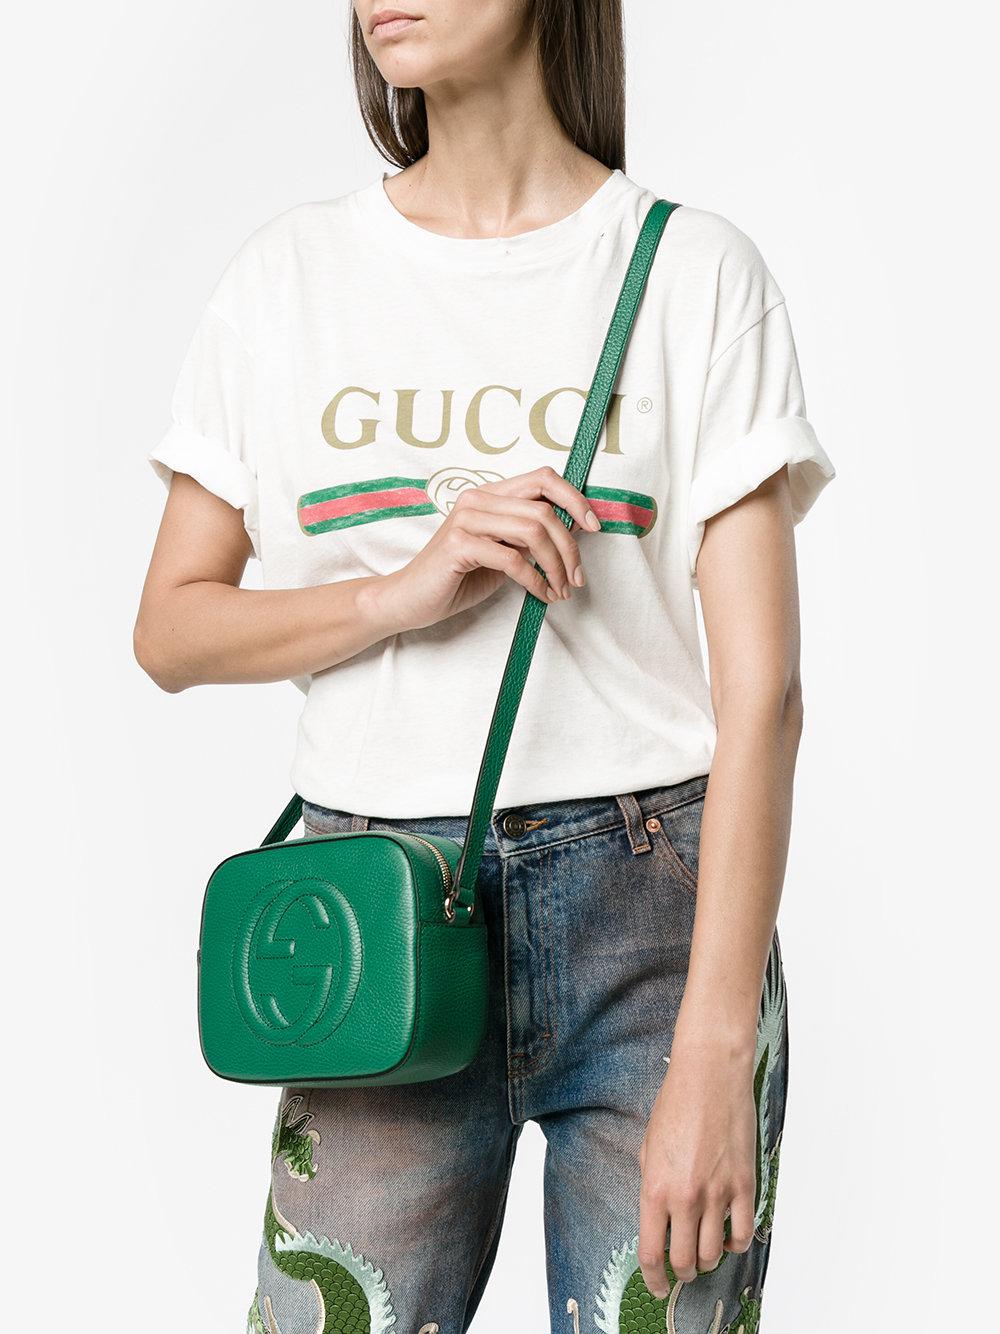 Lyst - Gucci Gg Soho Crossbody Bag in Green